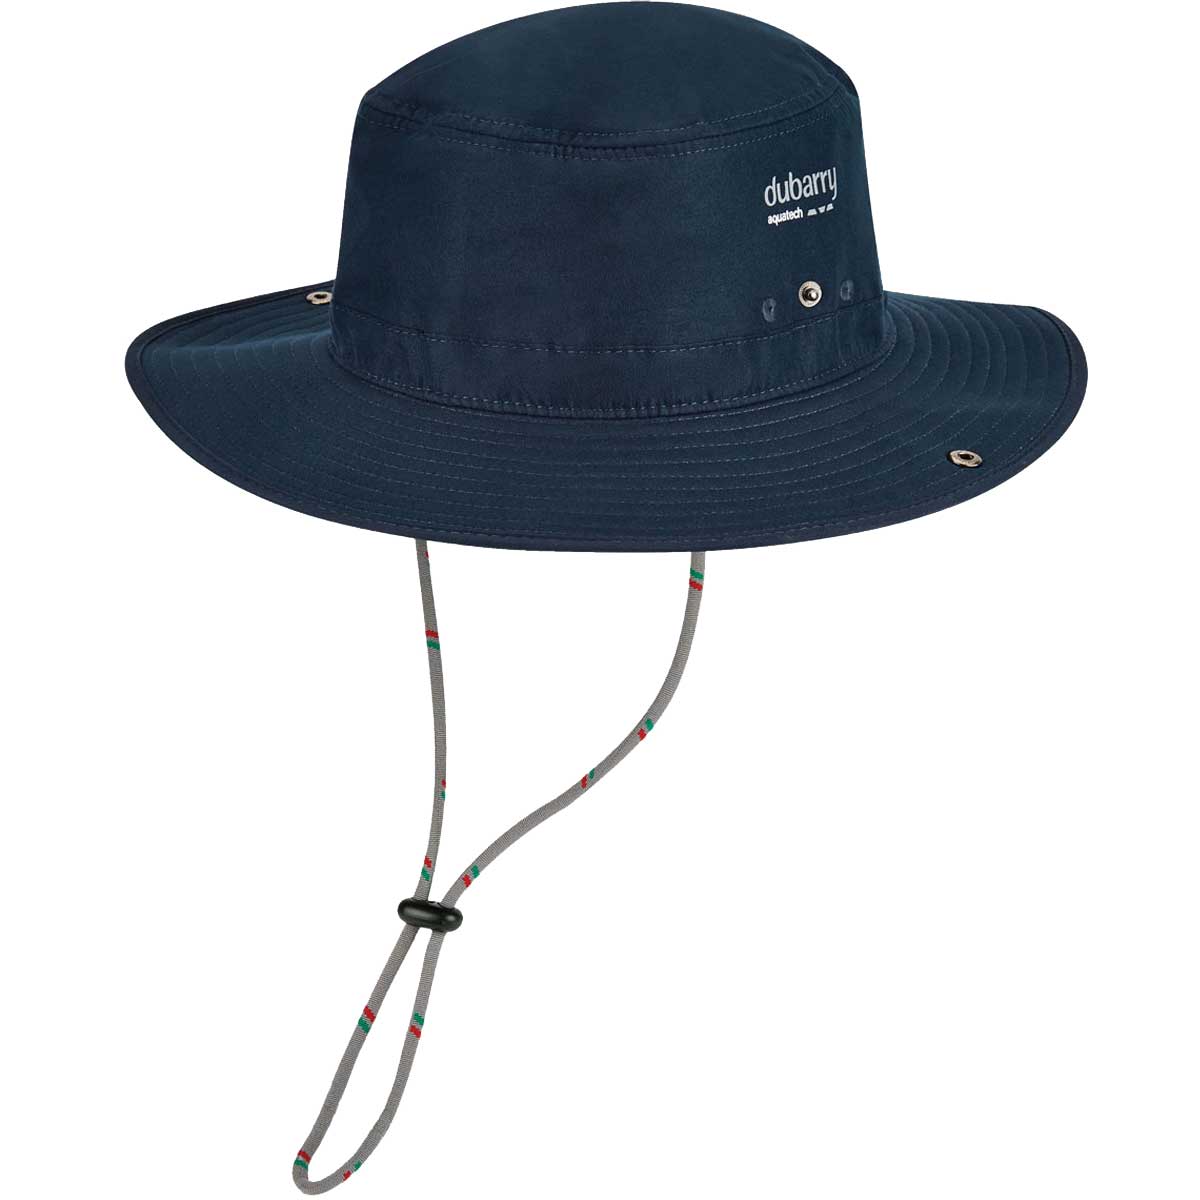 DUBARRY Genoa Brimmed Sun Hat - Navy